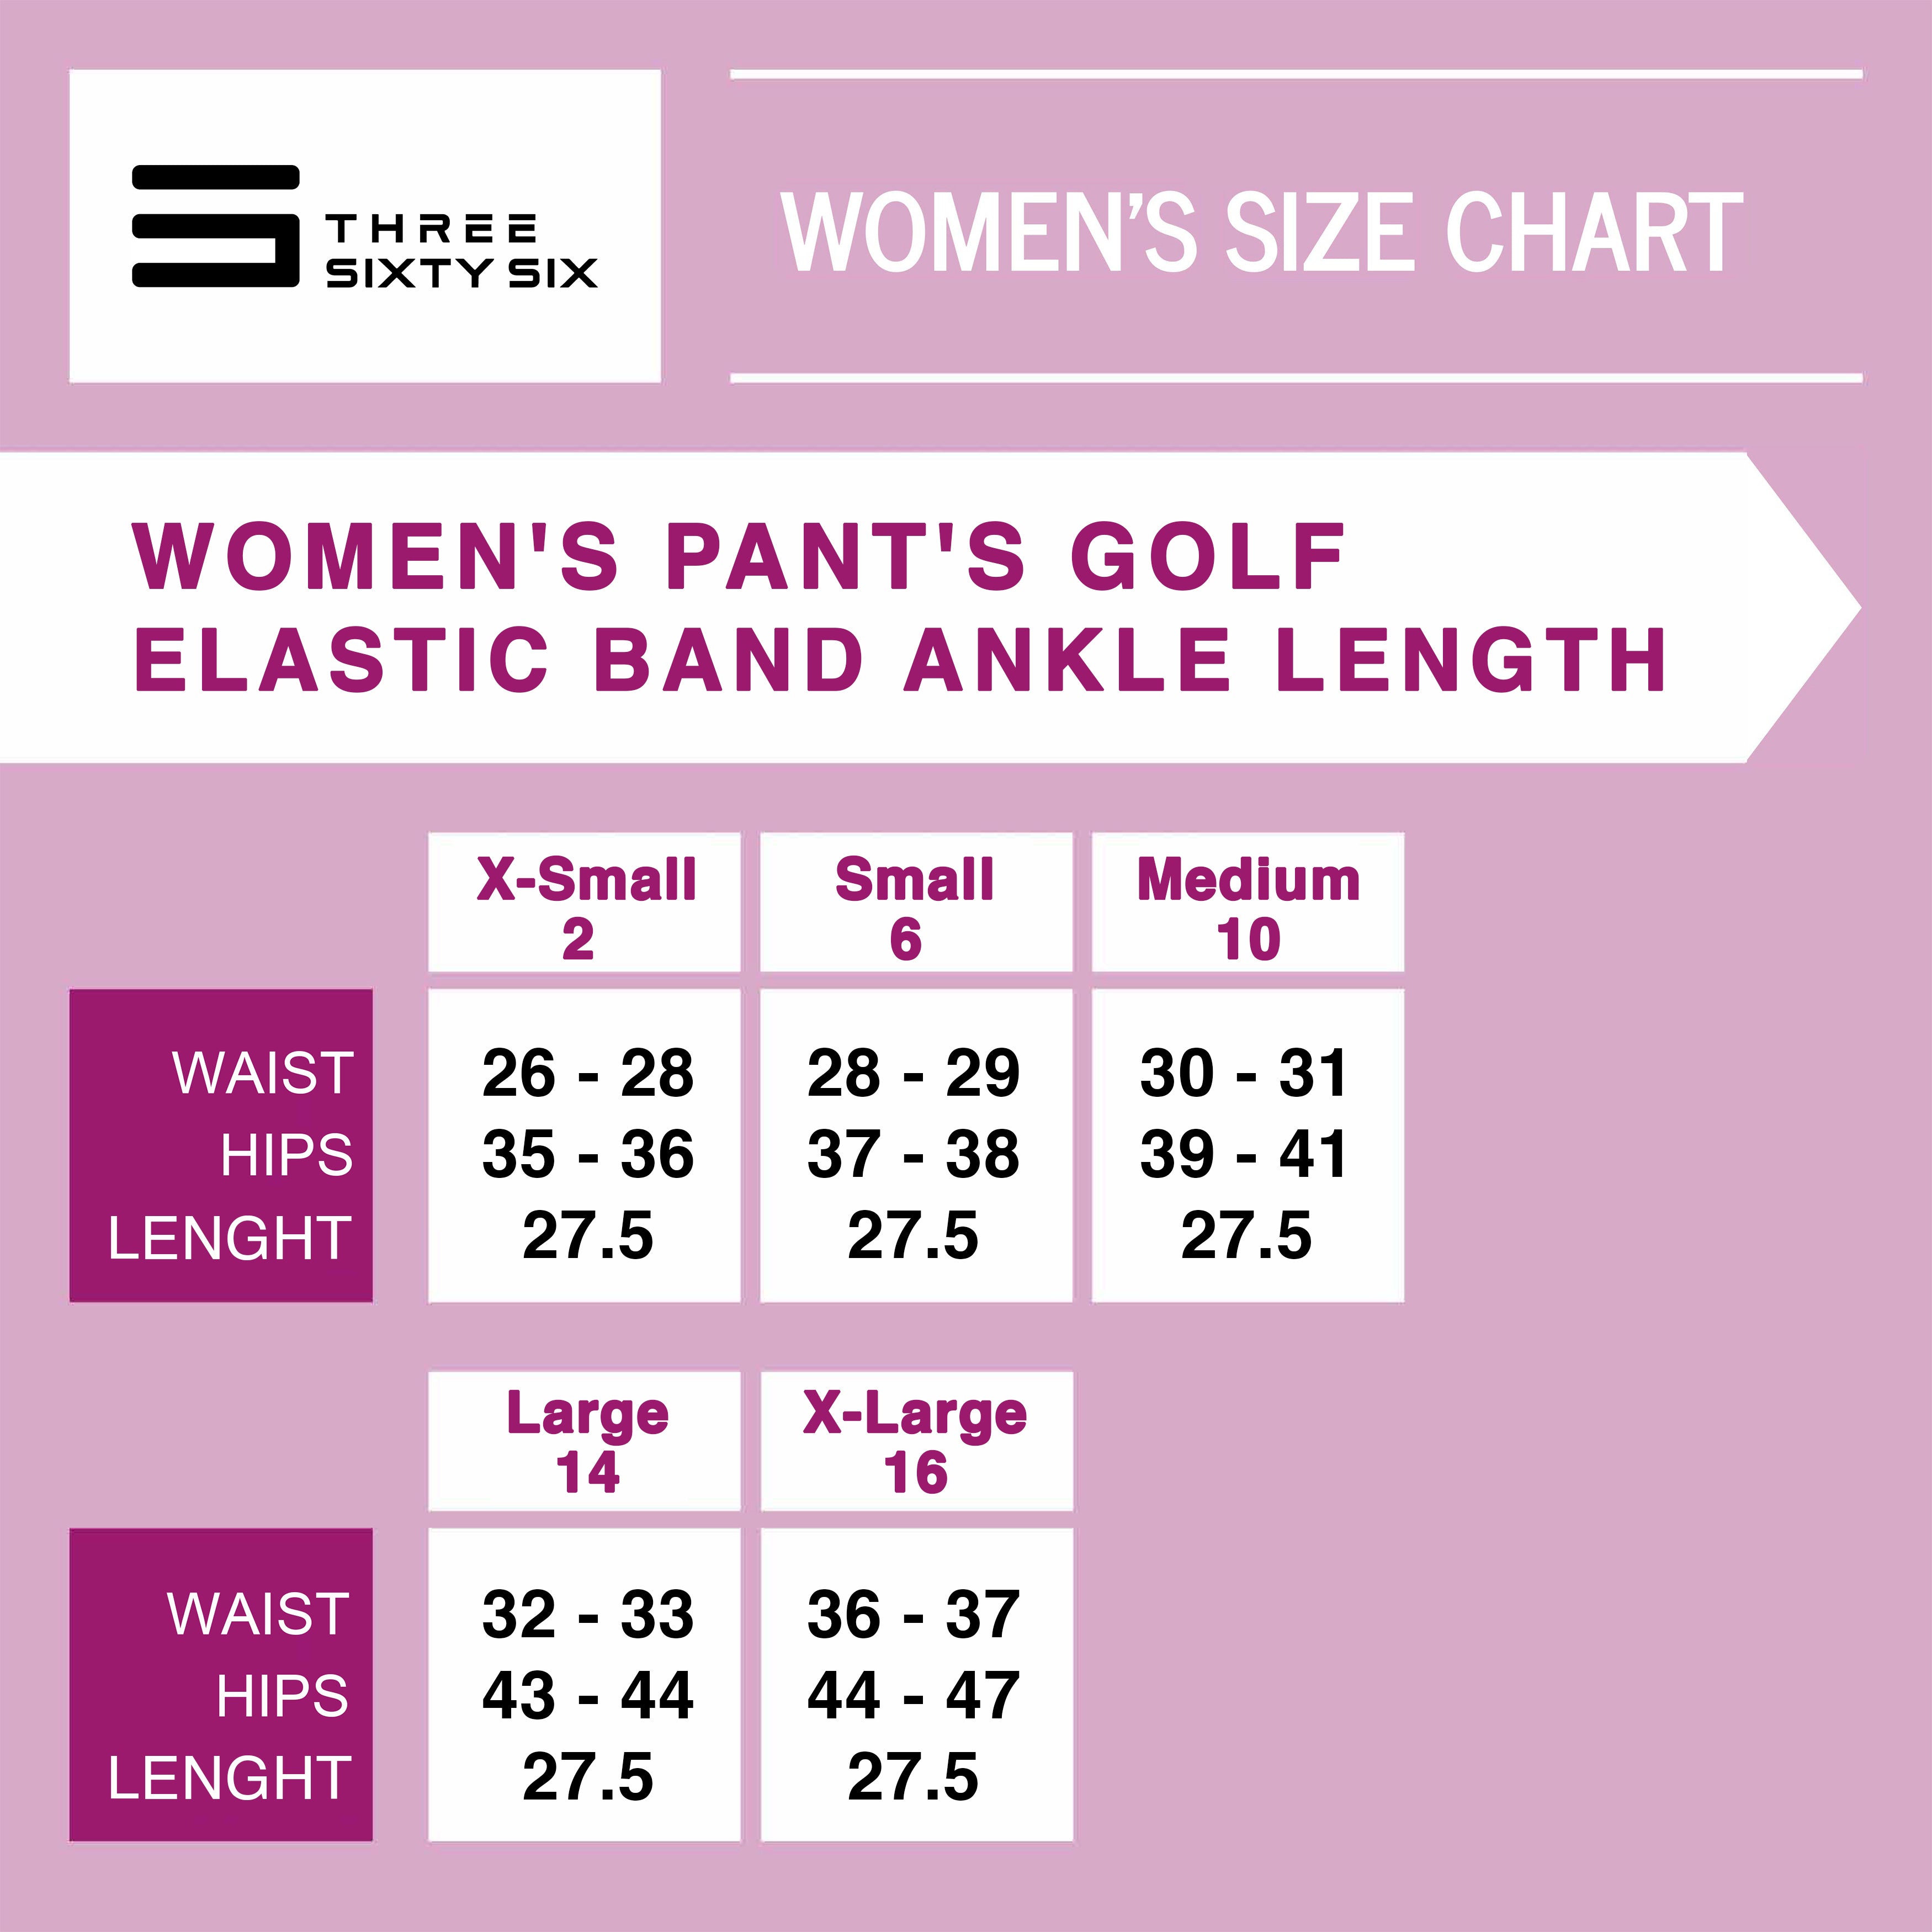 Three Sixty Six Women's Quick Dry Golf Pants - Lightweight W/ 4-Way Stretch  Fabric. Moisture Wicking, Anti-Odor Tech, UPF 50+ Sun Protection - Silver  Grey